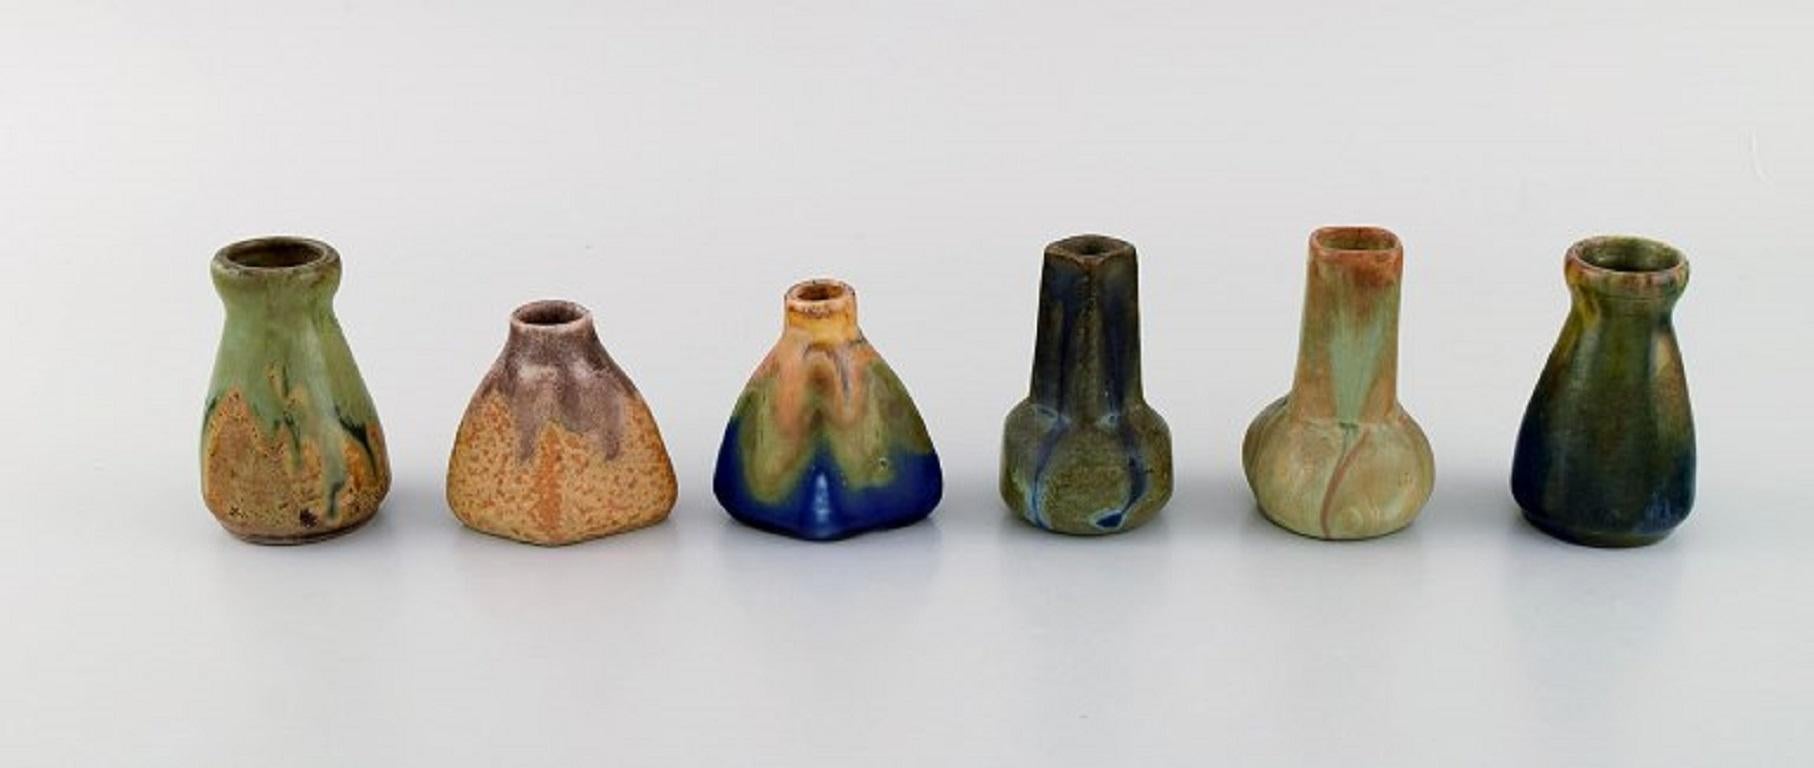 Six Belgian miniature vases in glazed ceramics. Mid-20th century.
Largest measures: 7 x 4.8 cm.
In excellent condition.